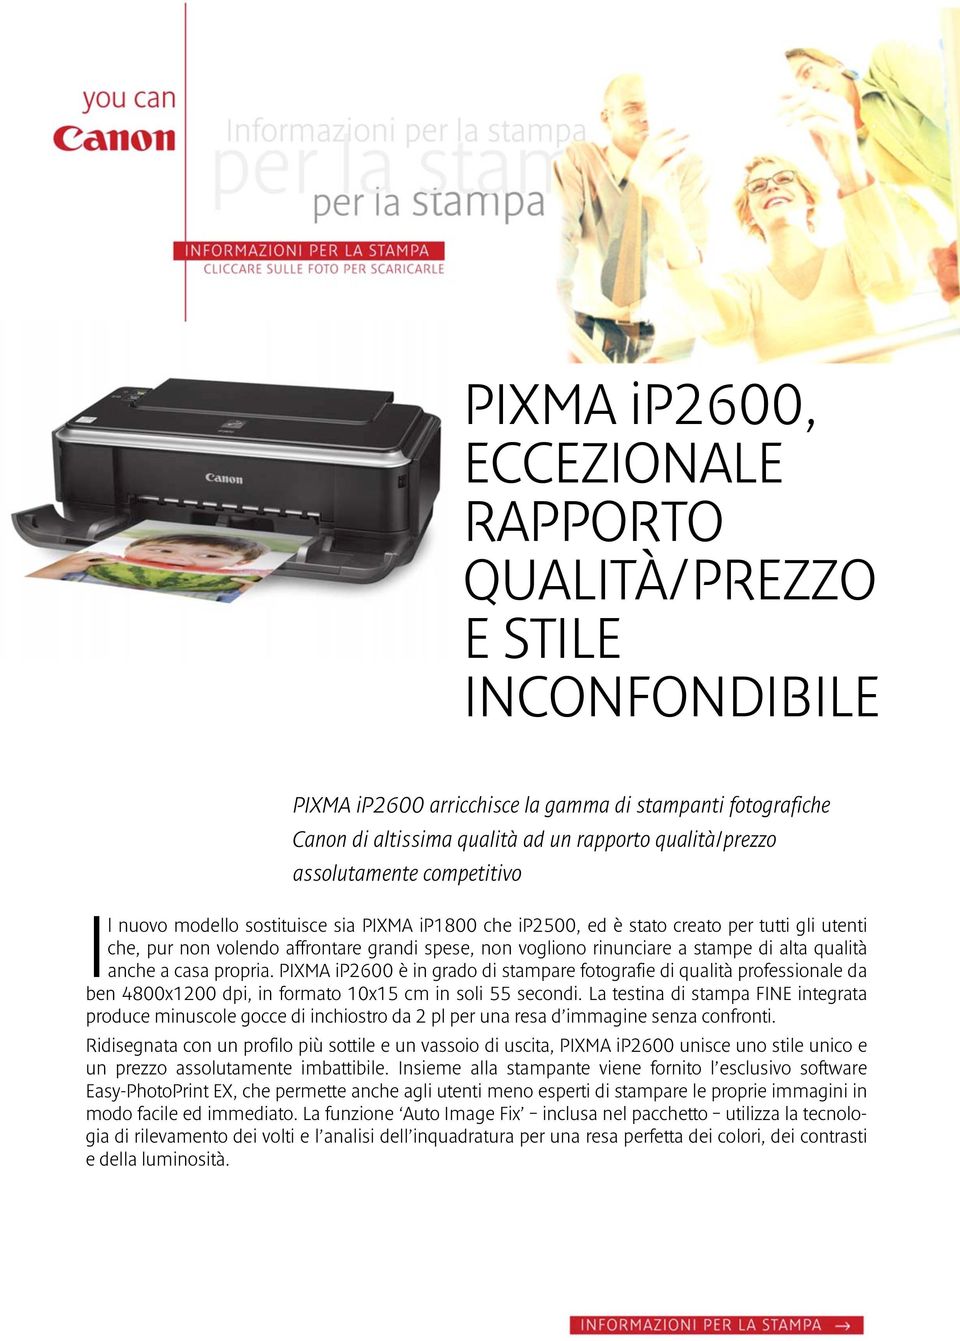 stampe di alta qualità anche a casa propria. PIXMA ip2600 è in grado di stampare fotografie di qualità professionale da ben 4800x1200 dpi, in formato 10x15 cm in soli 55 secondi.